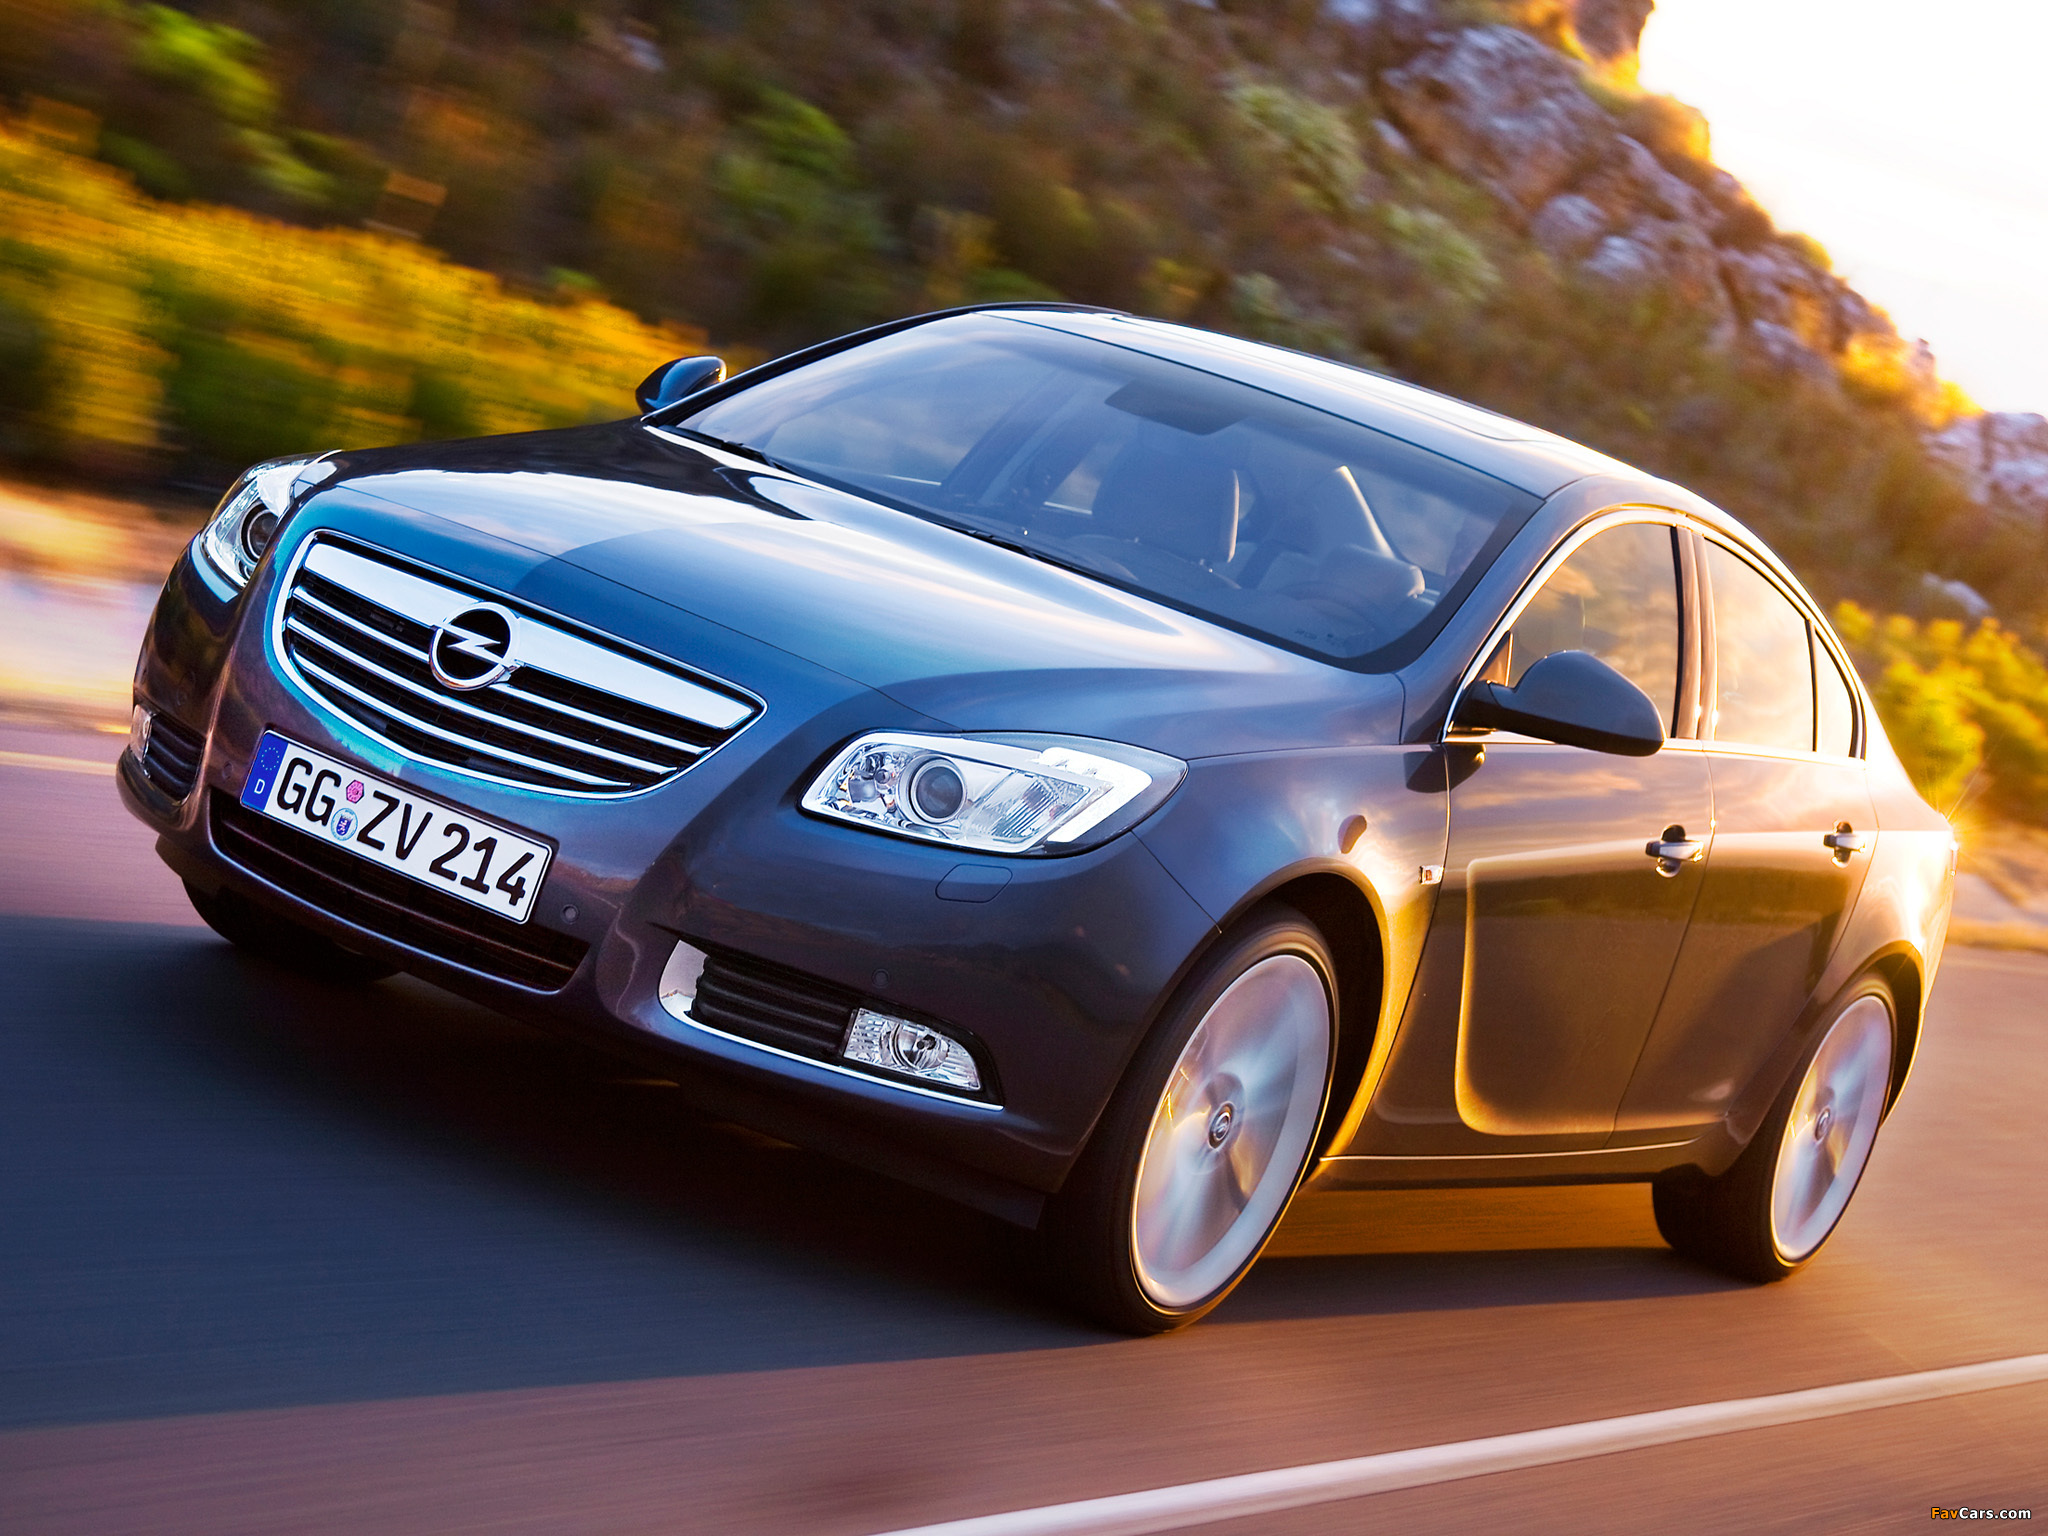 Прод авто. Опель Инсигния 2008. Опель Инсигния 1. Opel Insignia 2008, седан. Opel Insignia 2008-2013.